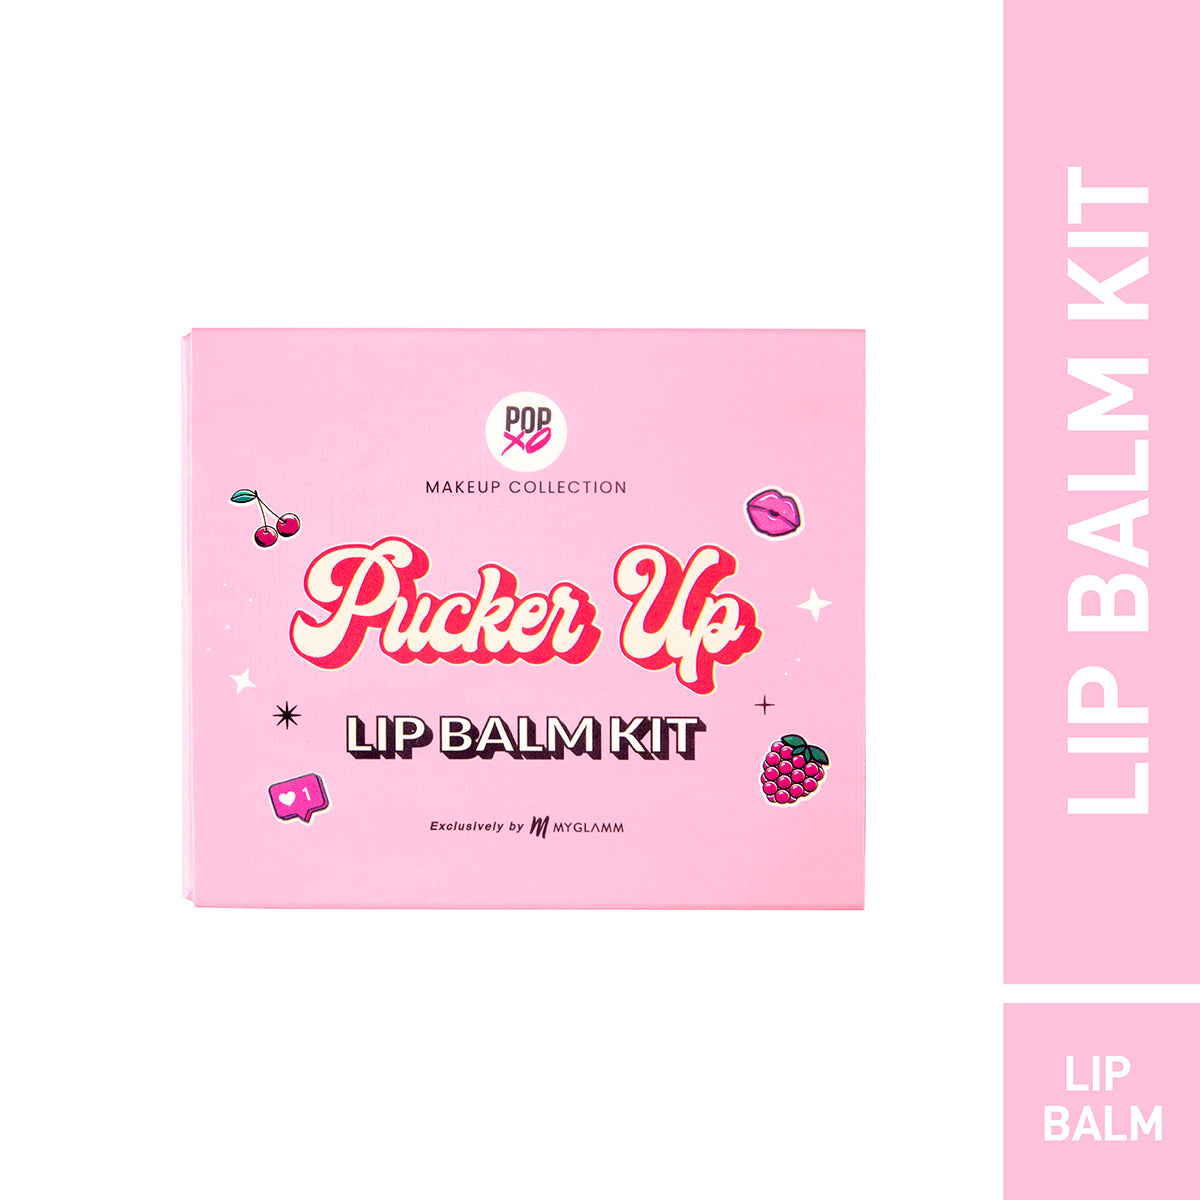 MyGlamm POPxo Makeup Pucker up lip balm Kit-Cherry Blossoms, Strawberry Kisses, Berrylicious-3gm